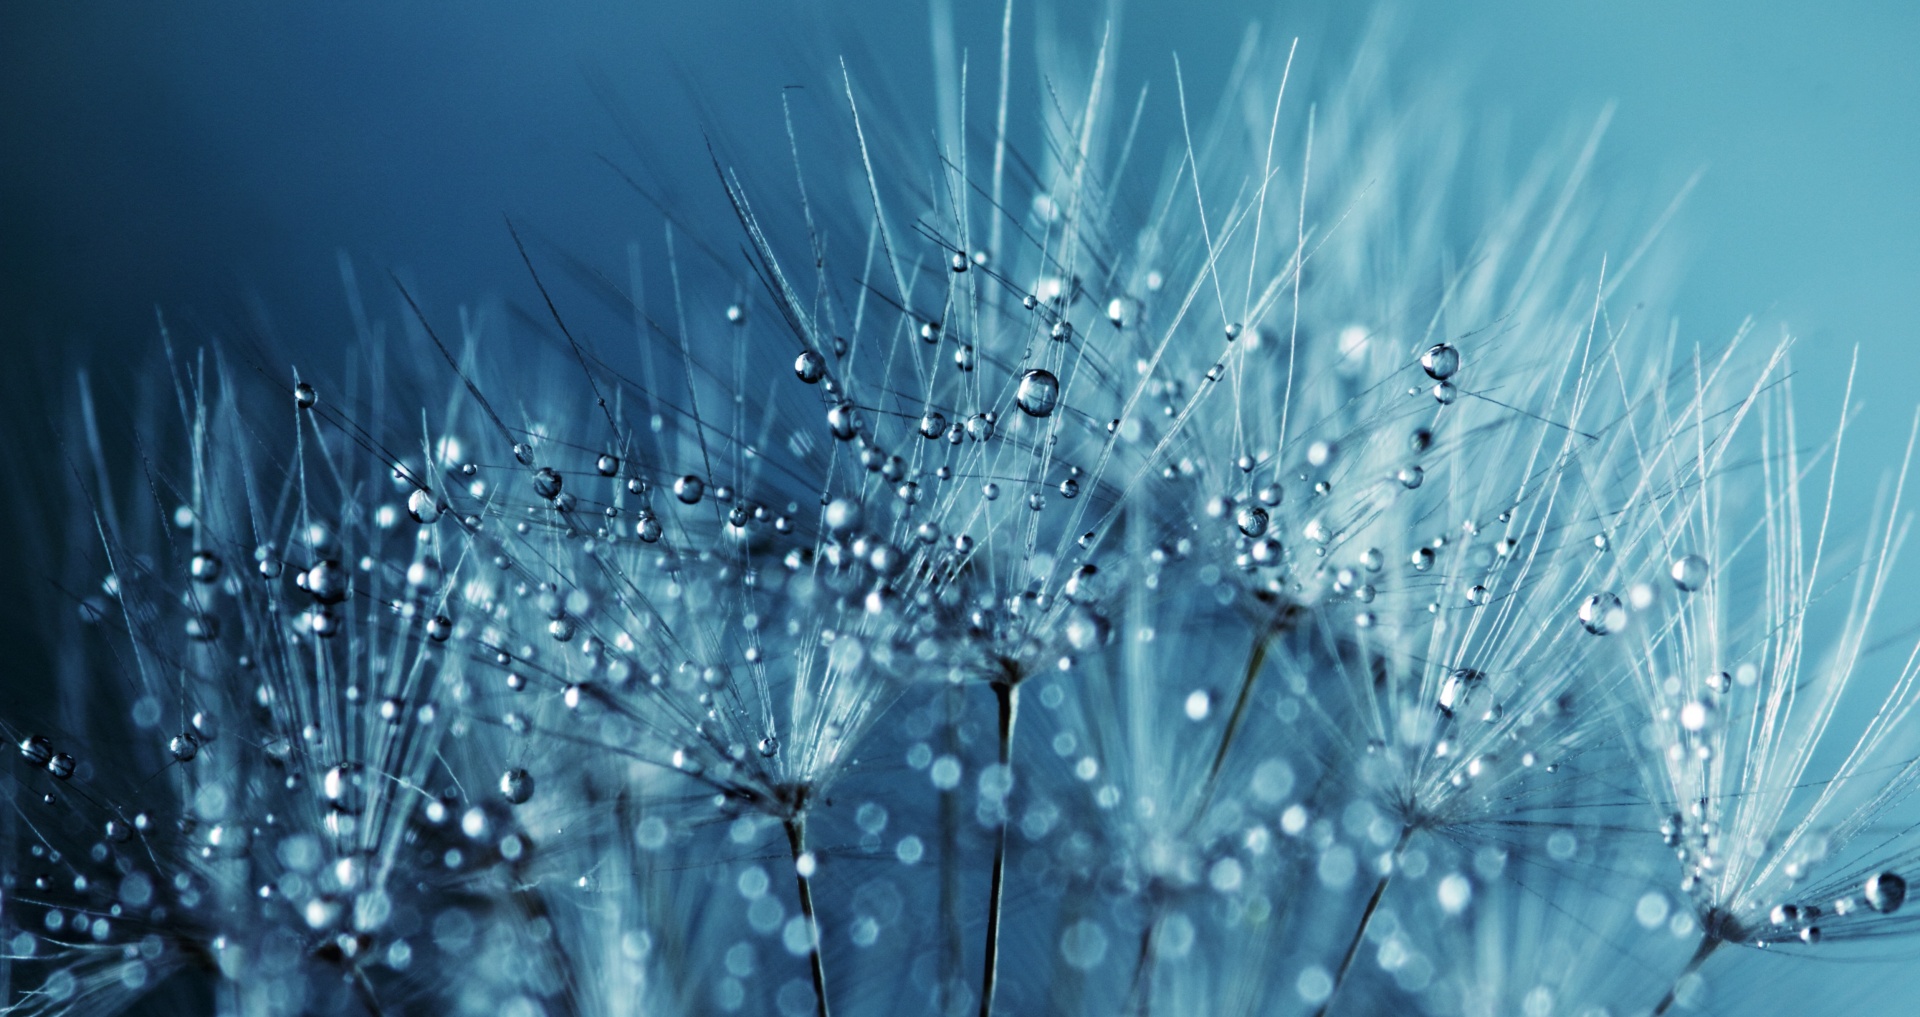 Dandelion Seeds Water Droplets